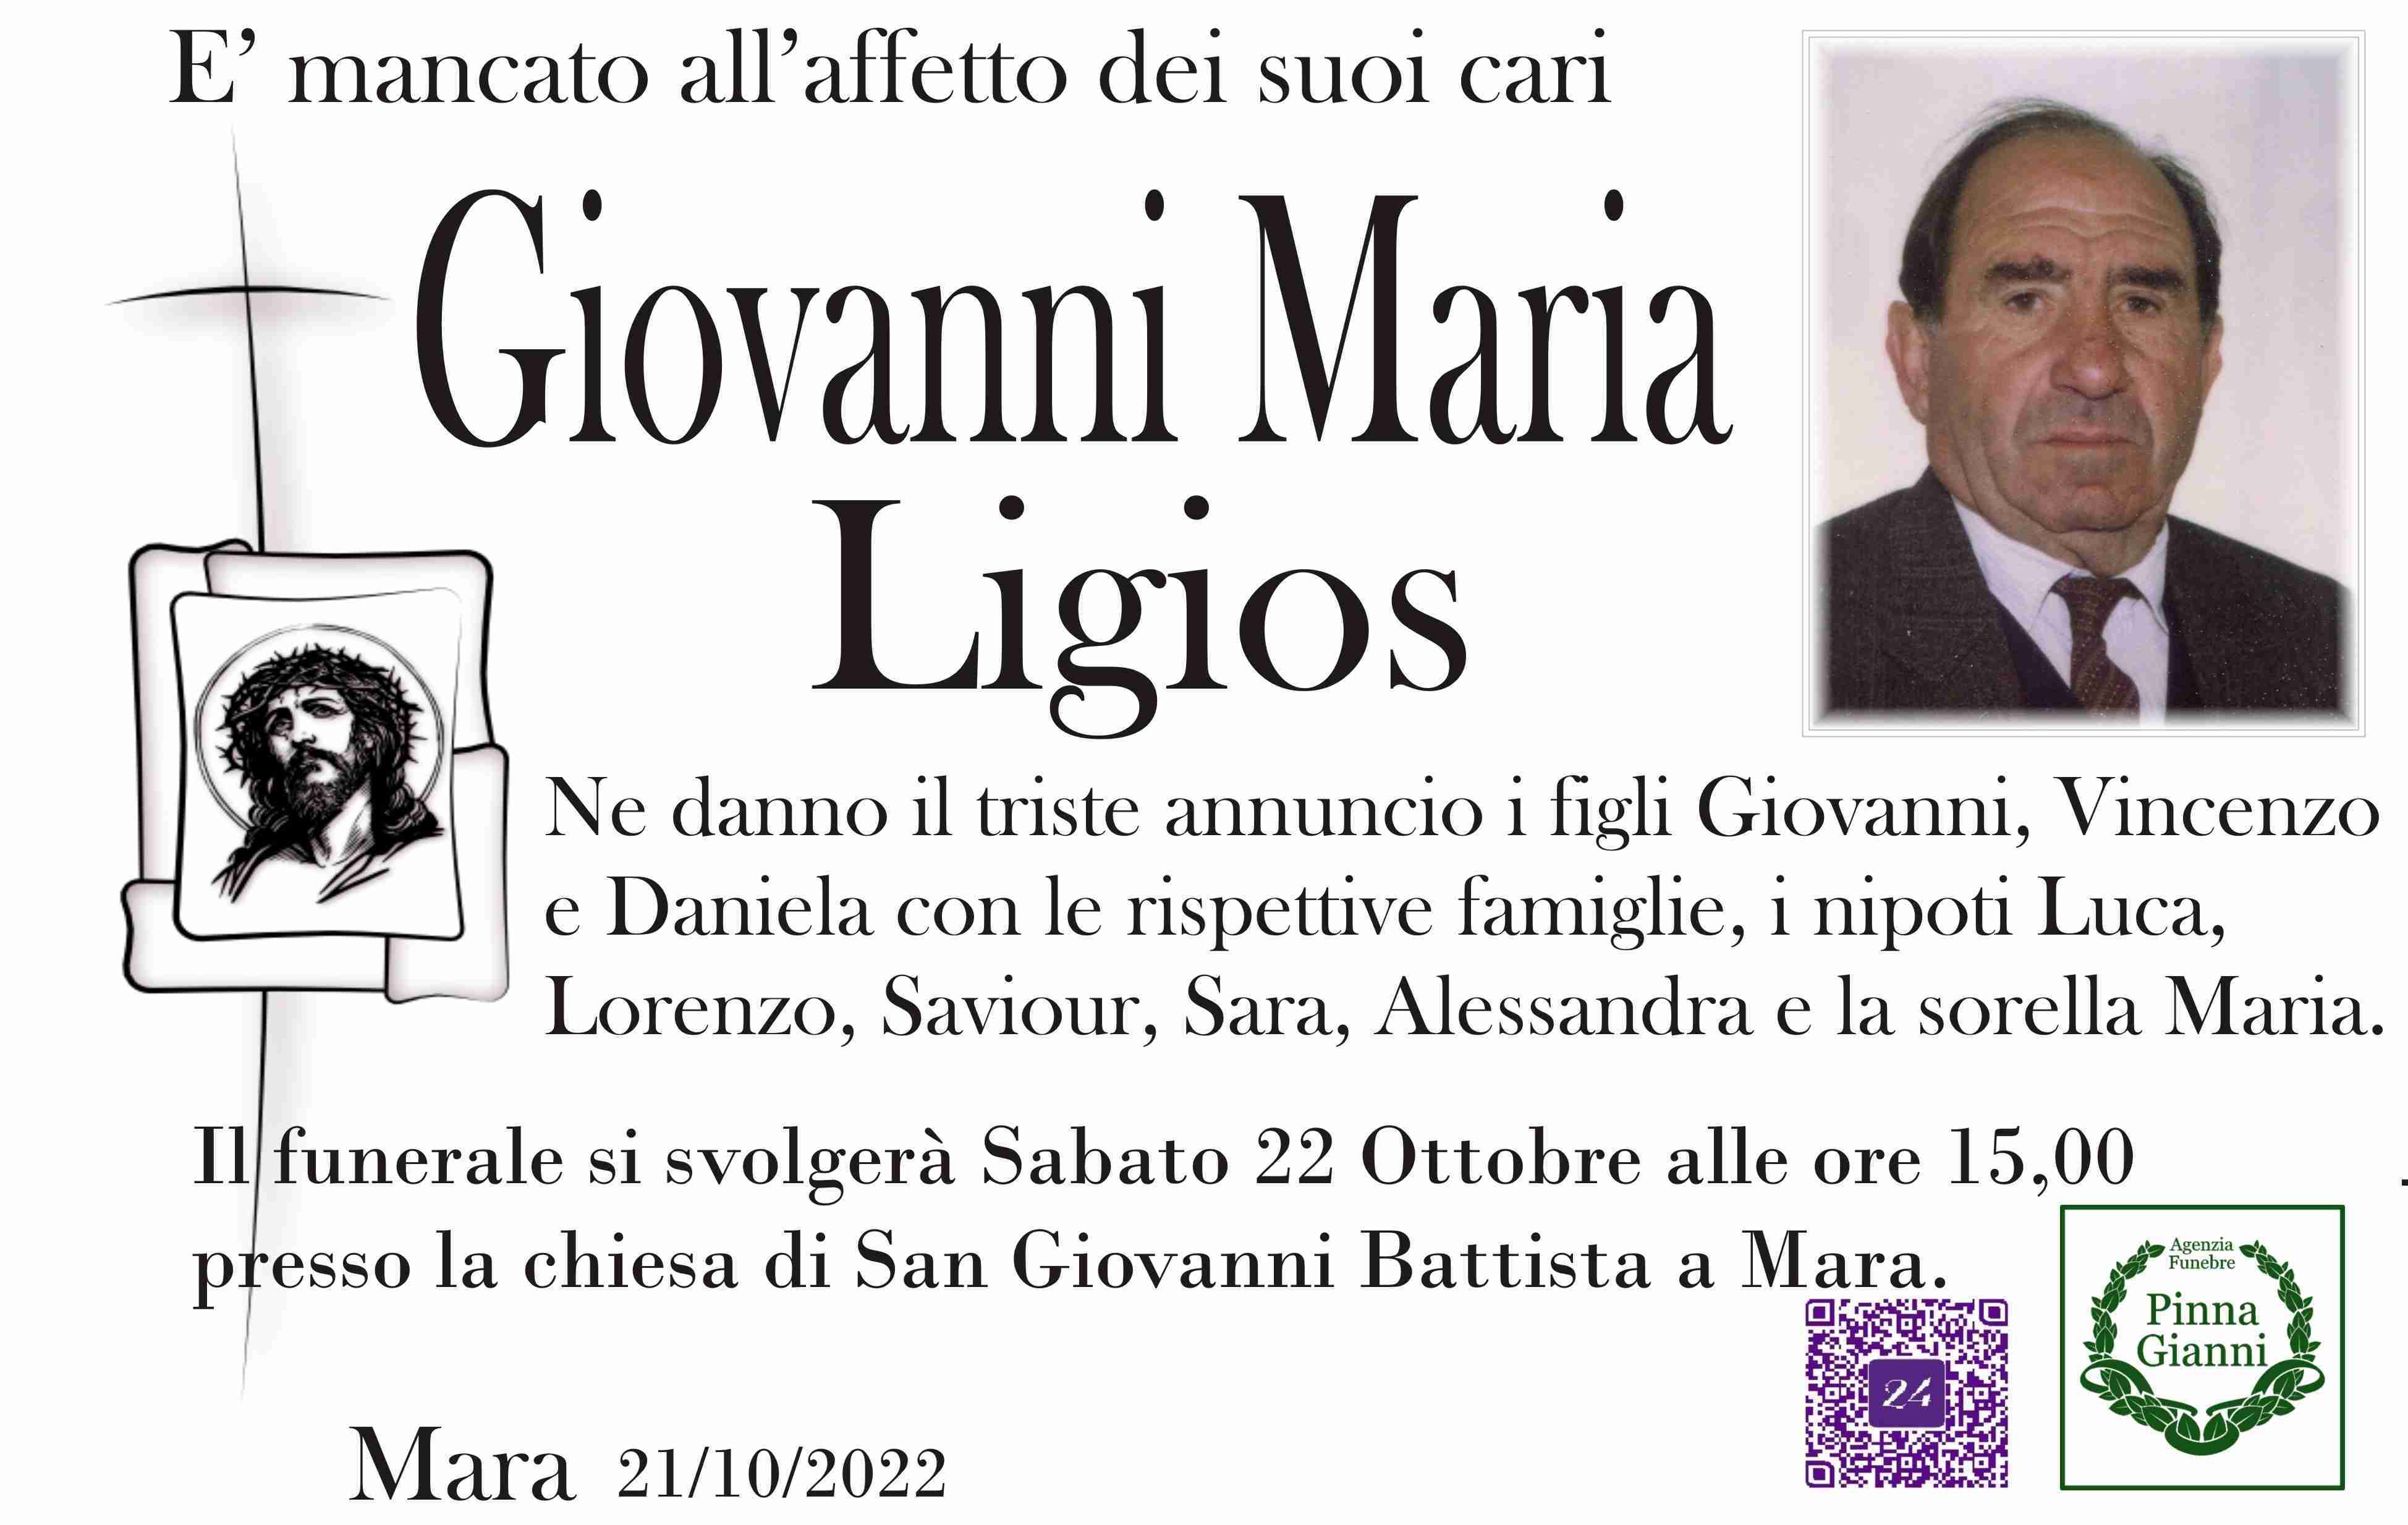 Giovanni Maria Ligios